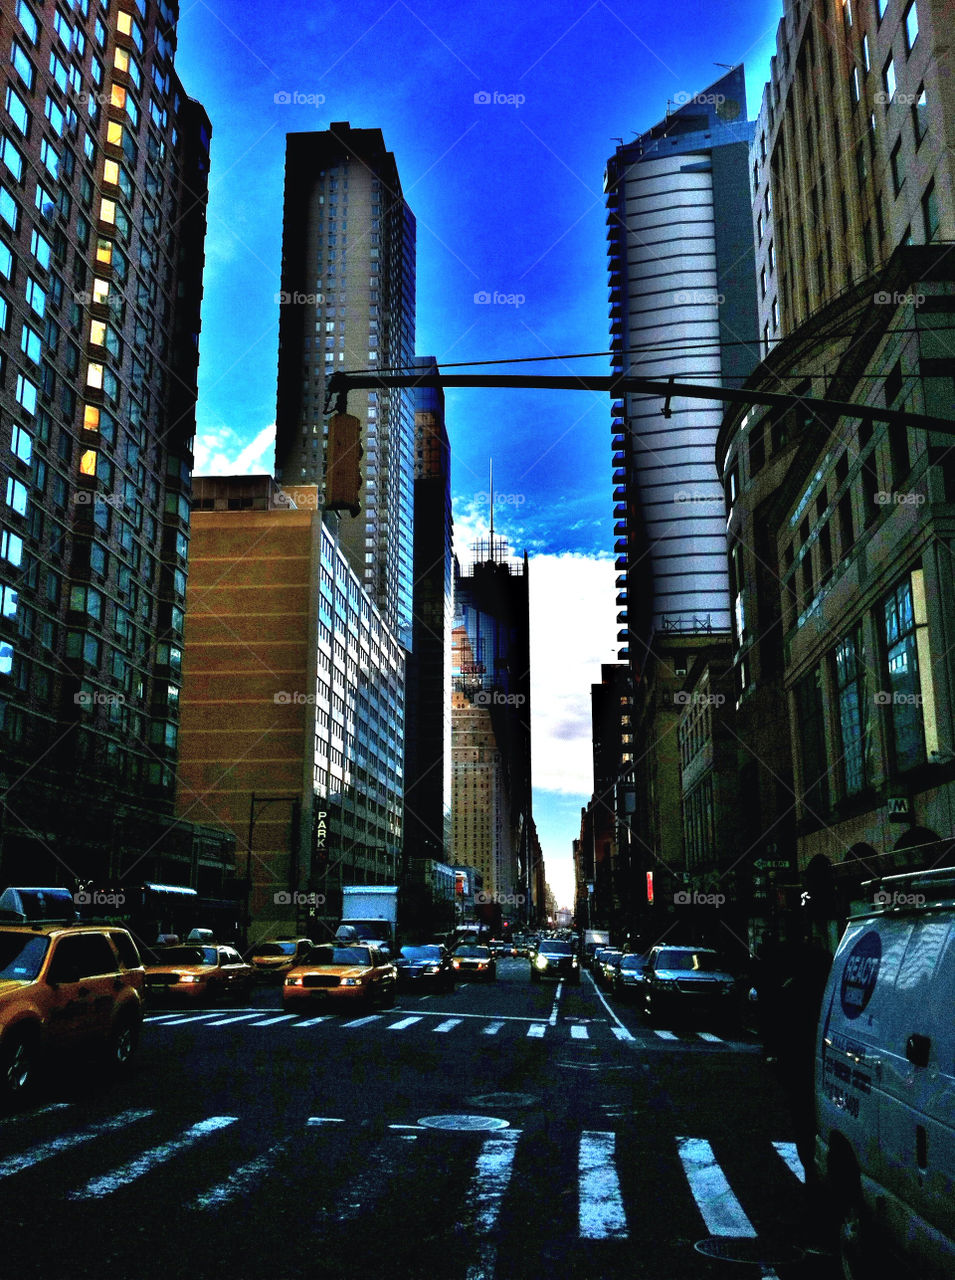 new traffic new york nyc by steve_pollo_yo